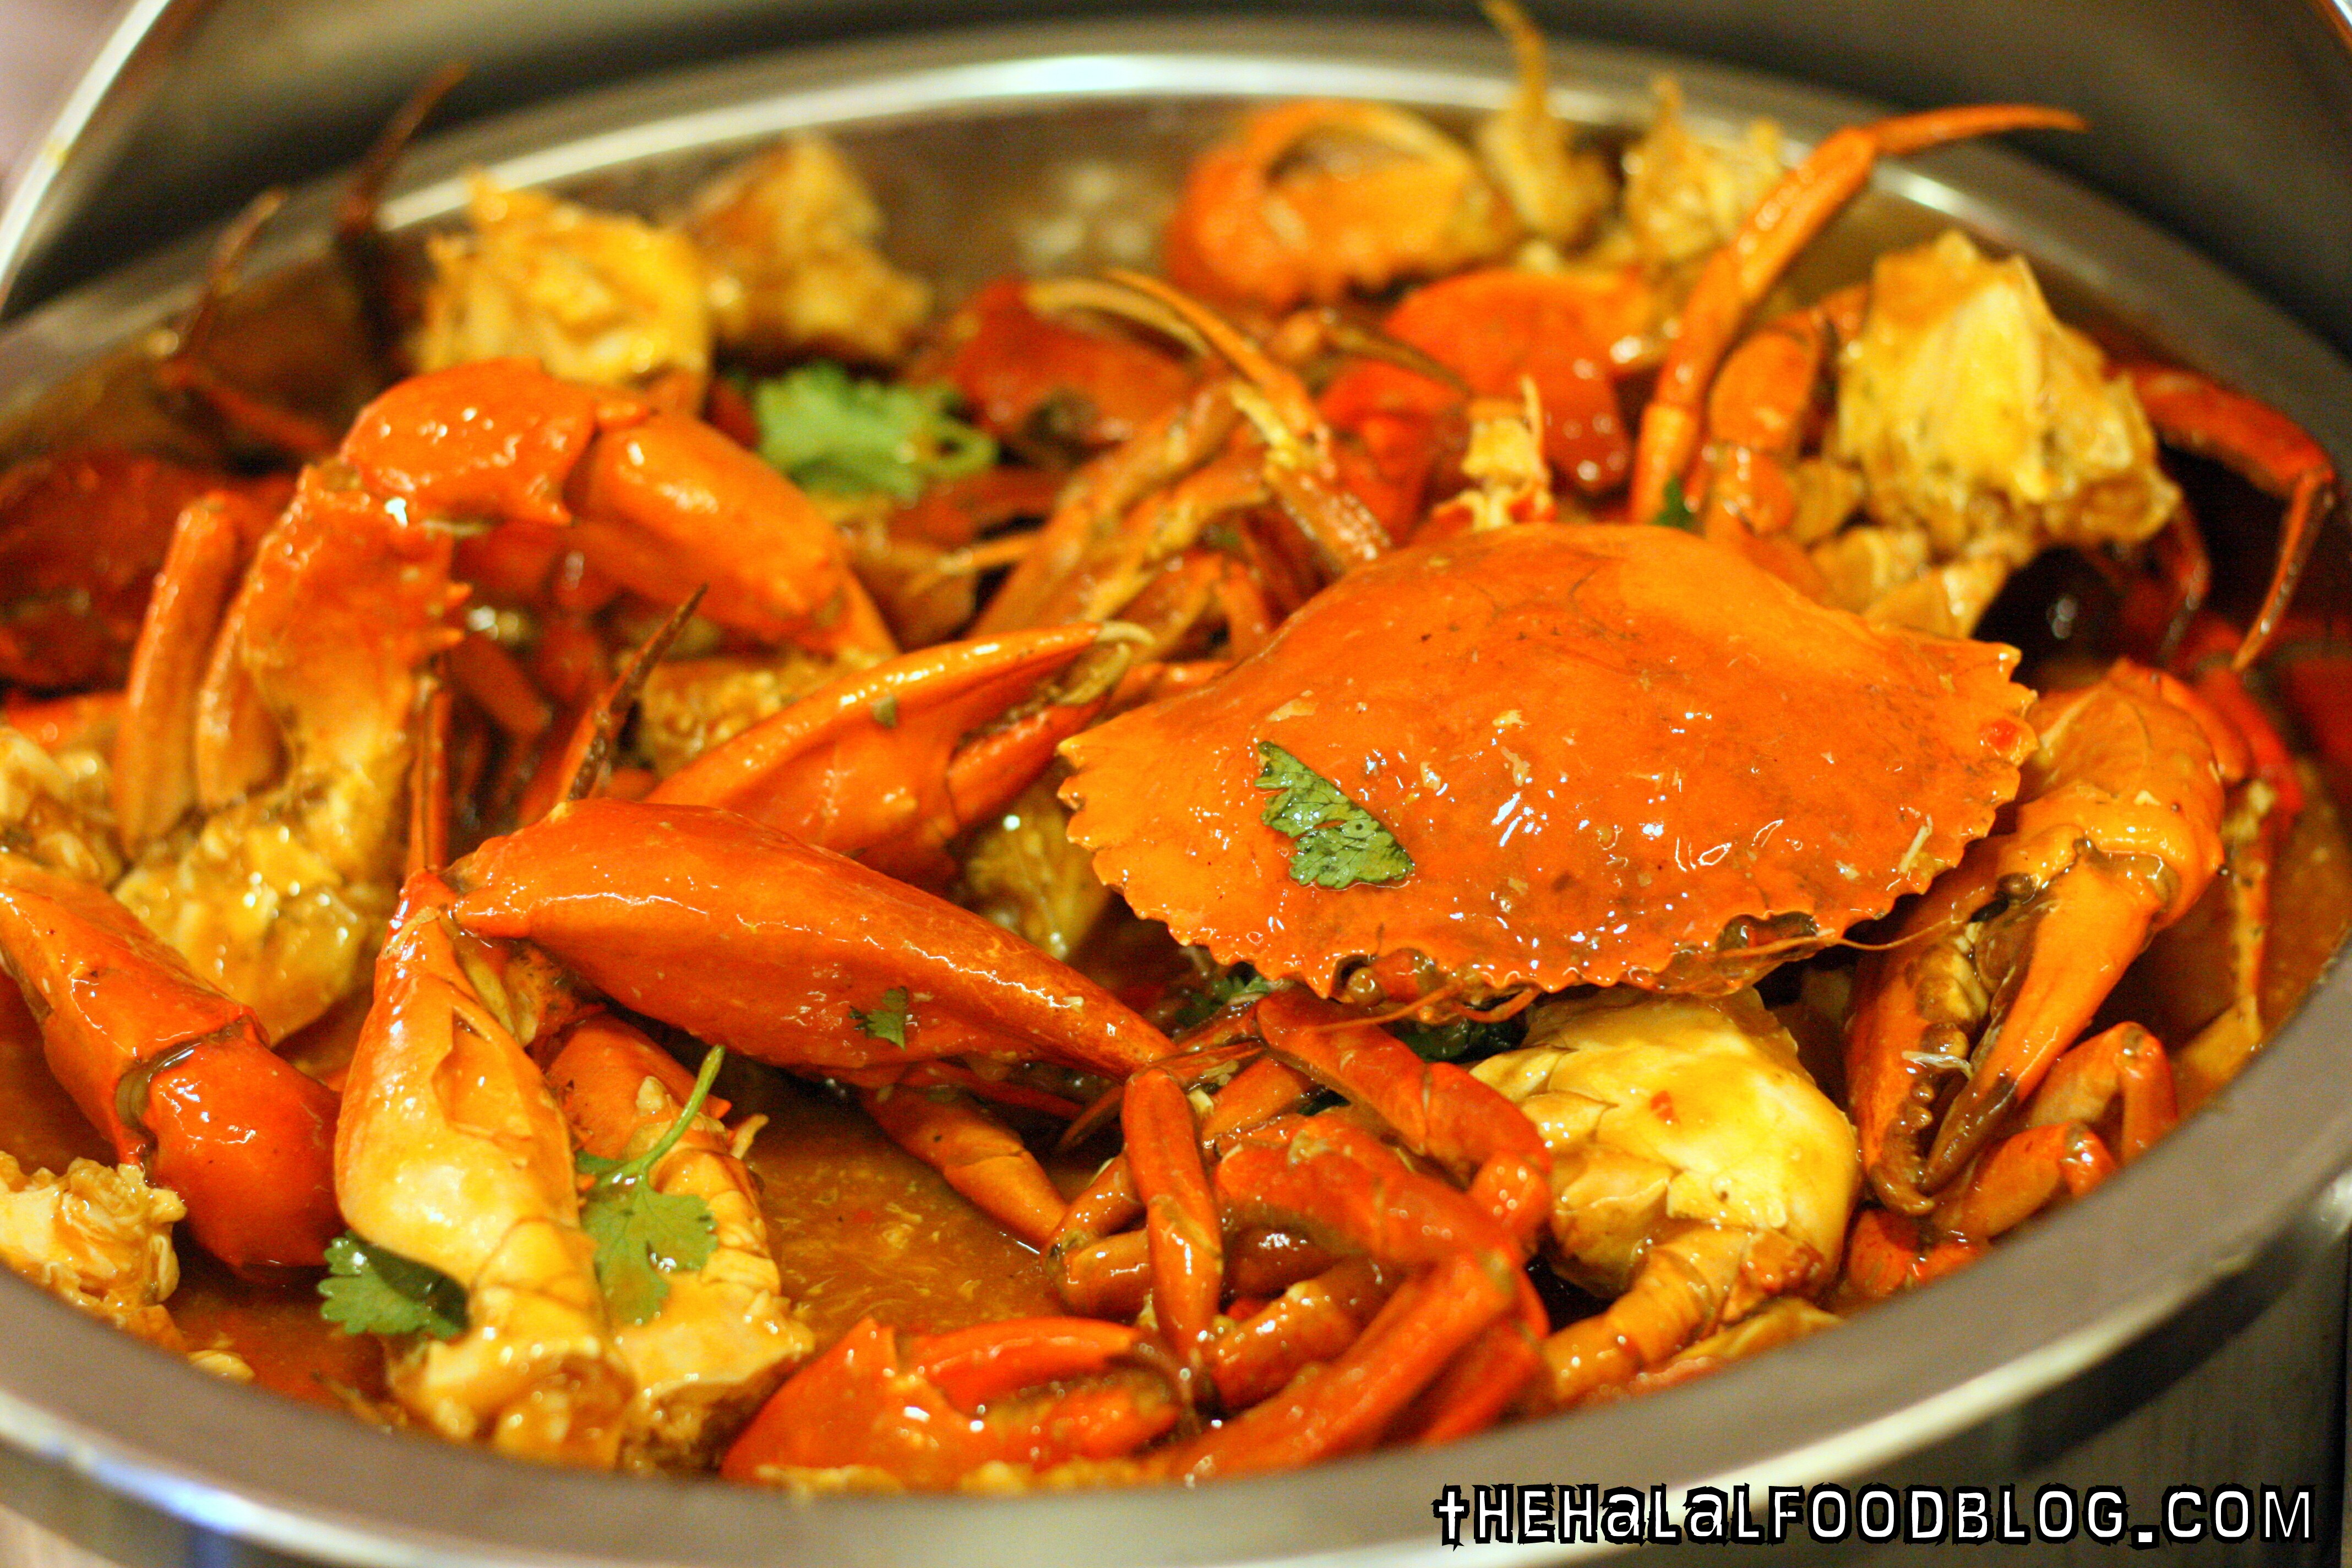 Penang St Buffet - Crab Madness Buffet - The Halal Food Blog